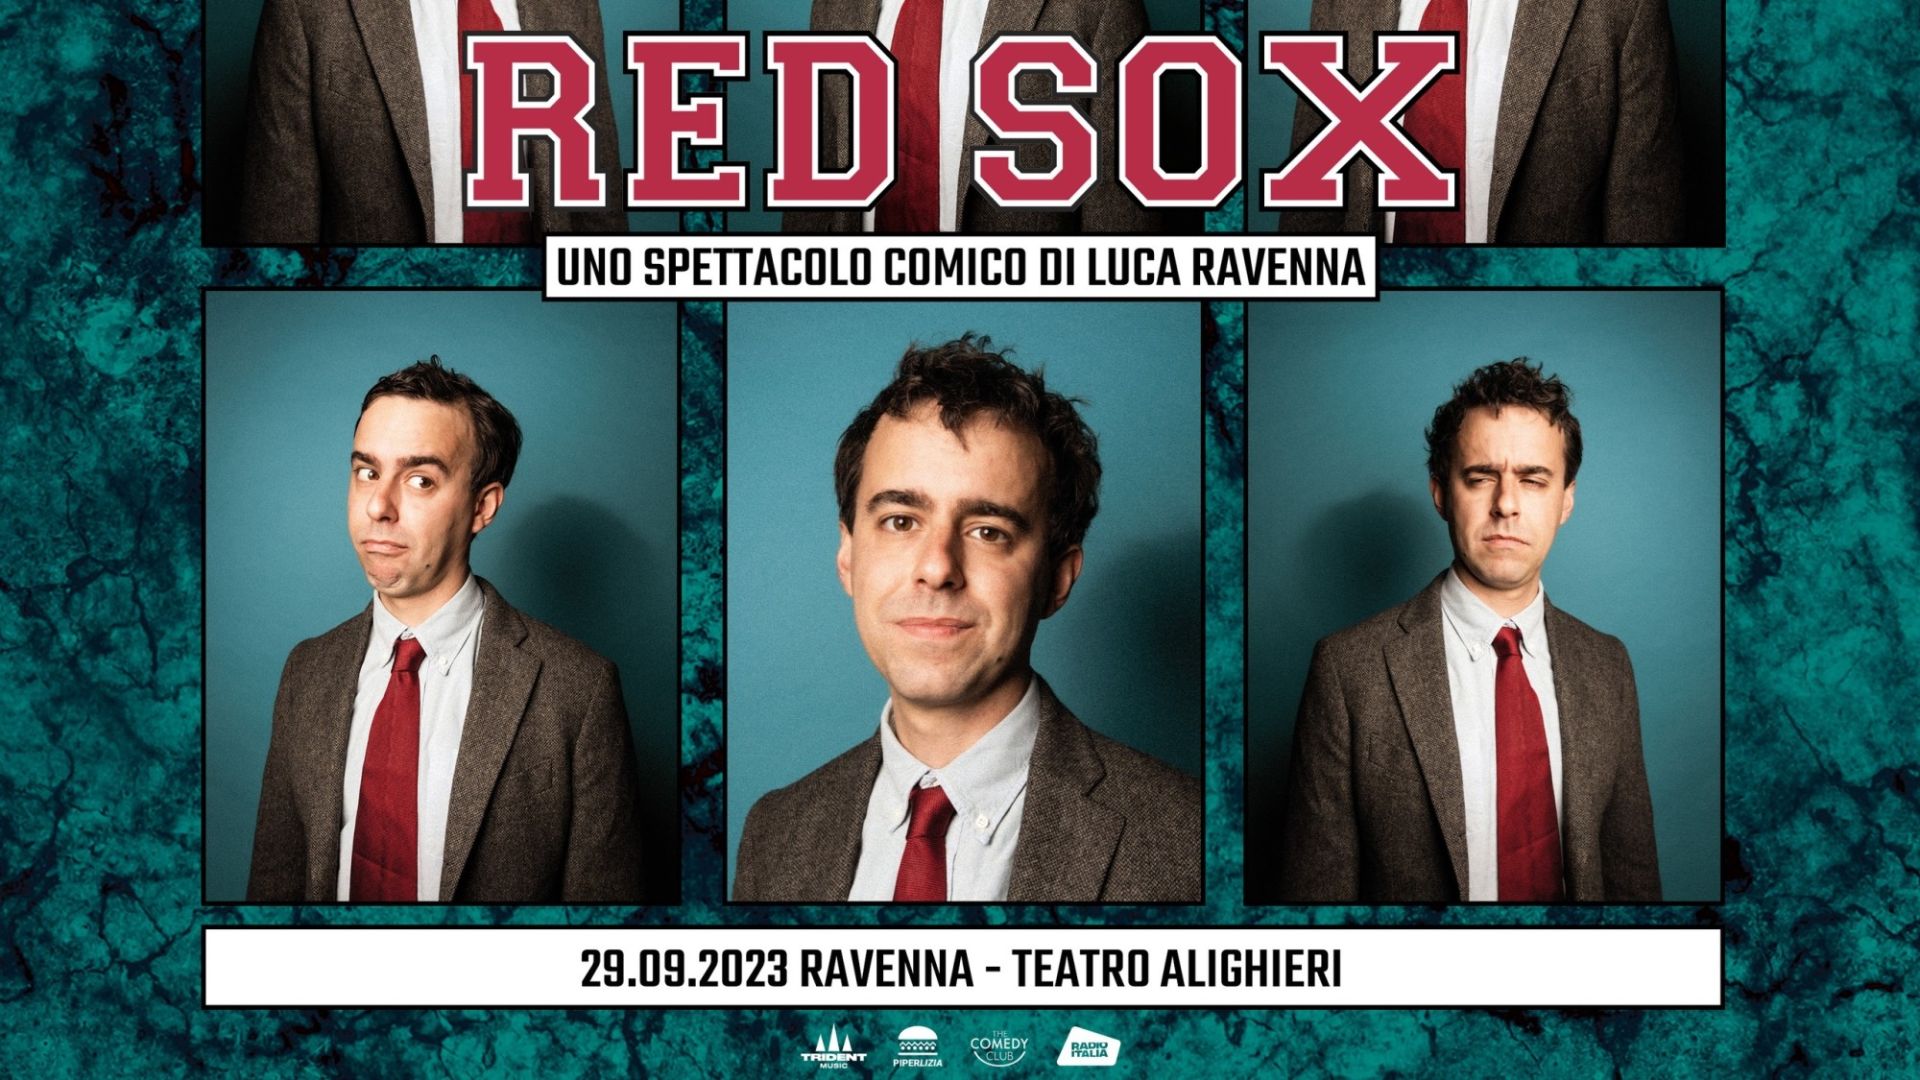 Luca Ravenna "Red Sox"